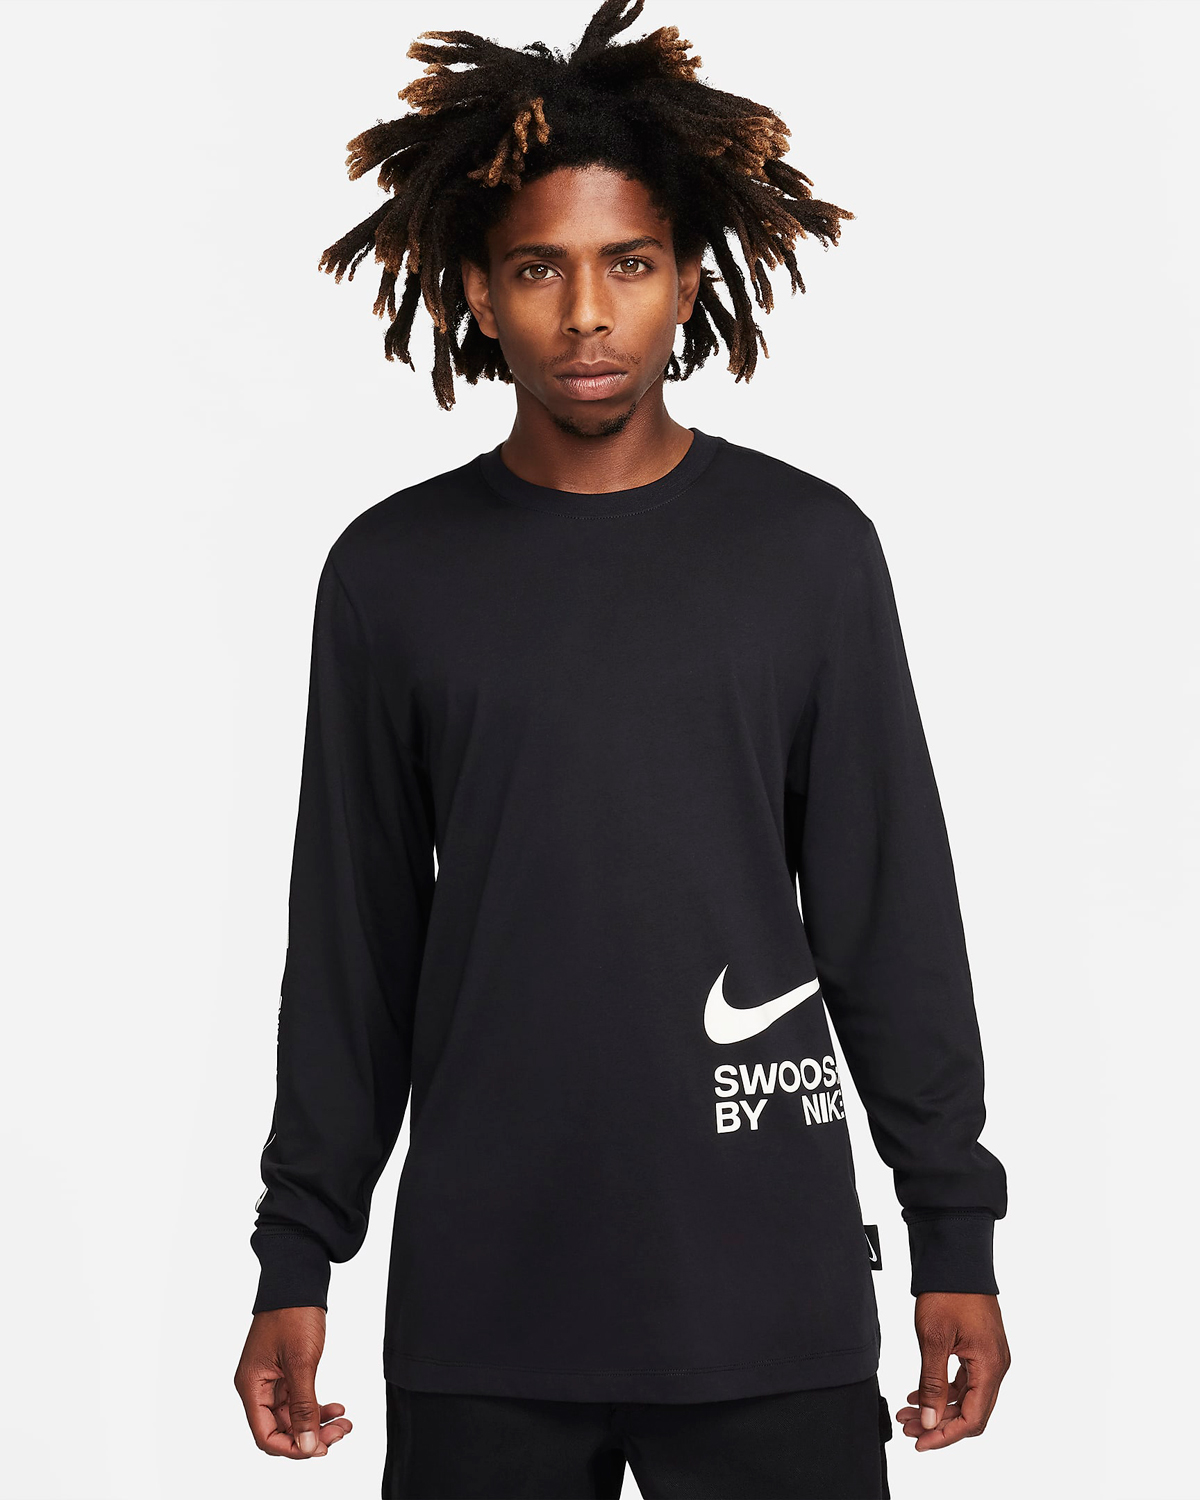 Nike-Sportswear-Long-Sleeve-T-Shirt-Black-White